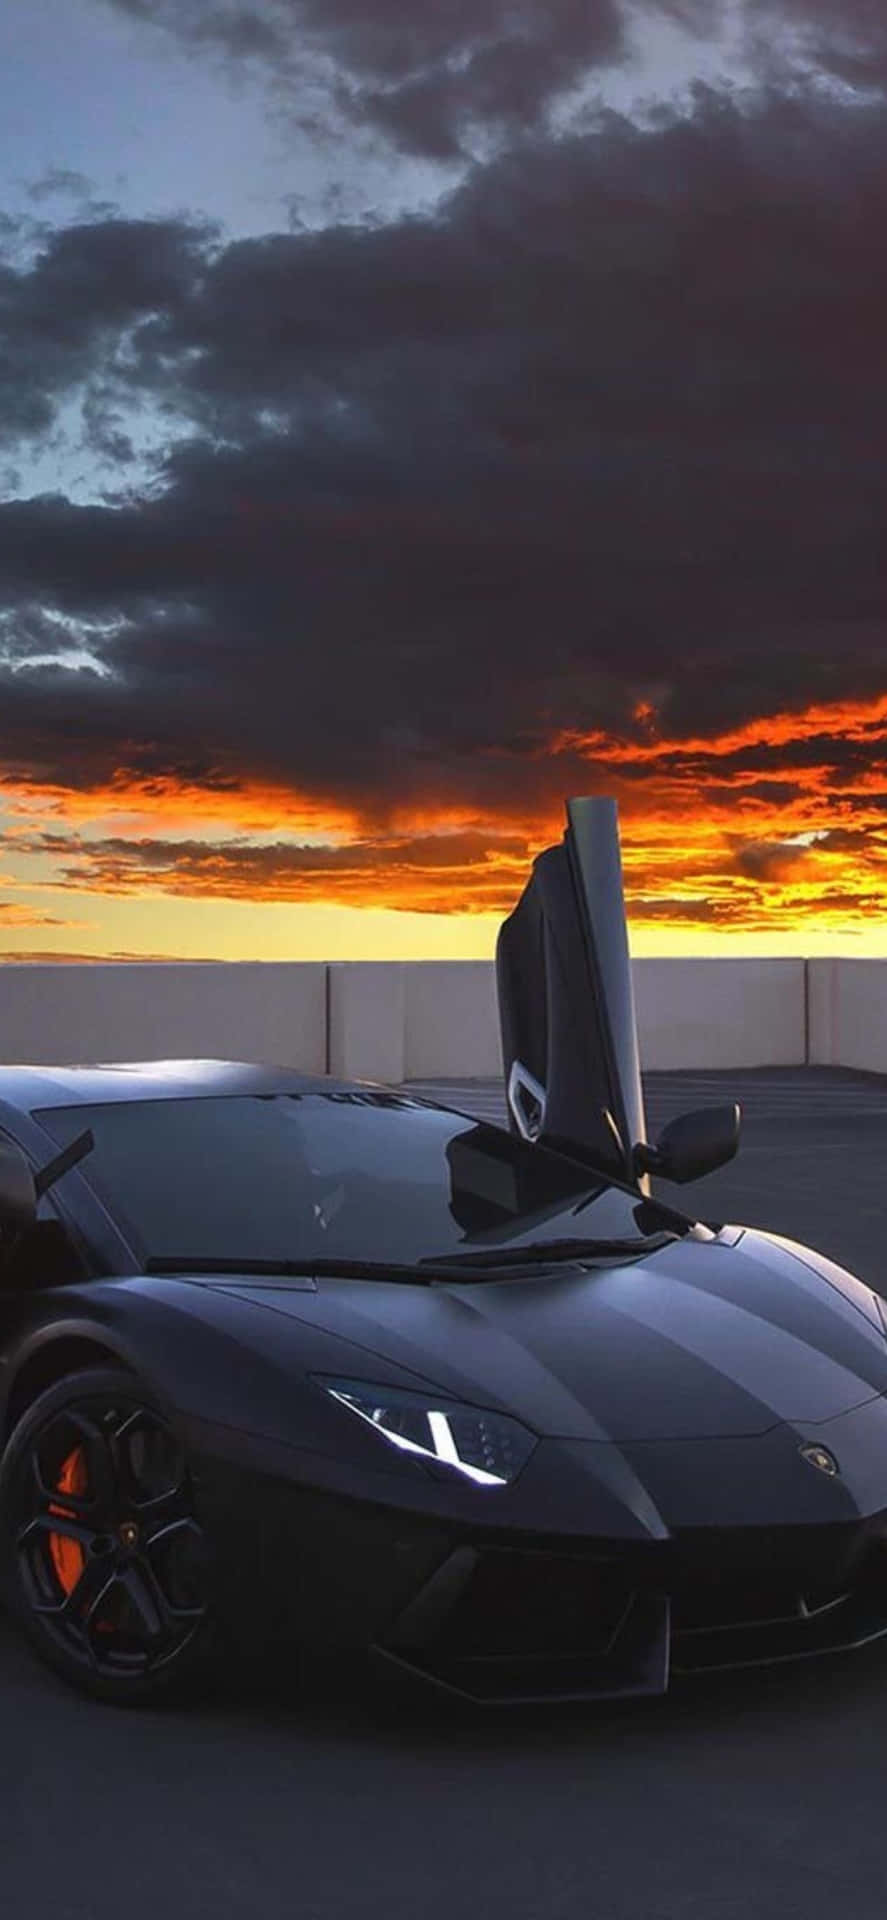 Iphonexs Max Lamborghini Black Aventador Bakgrundsbild.